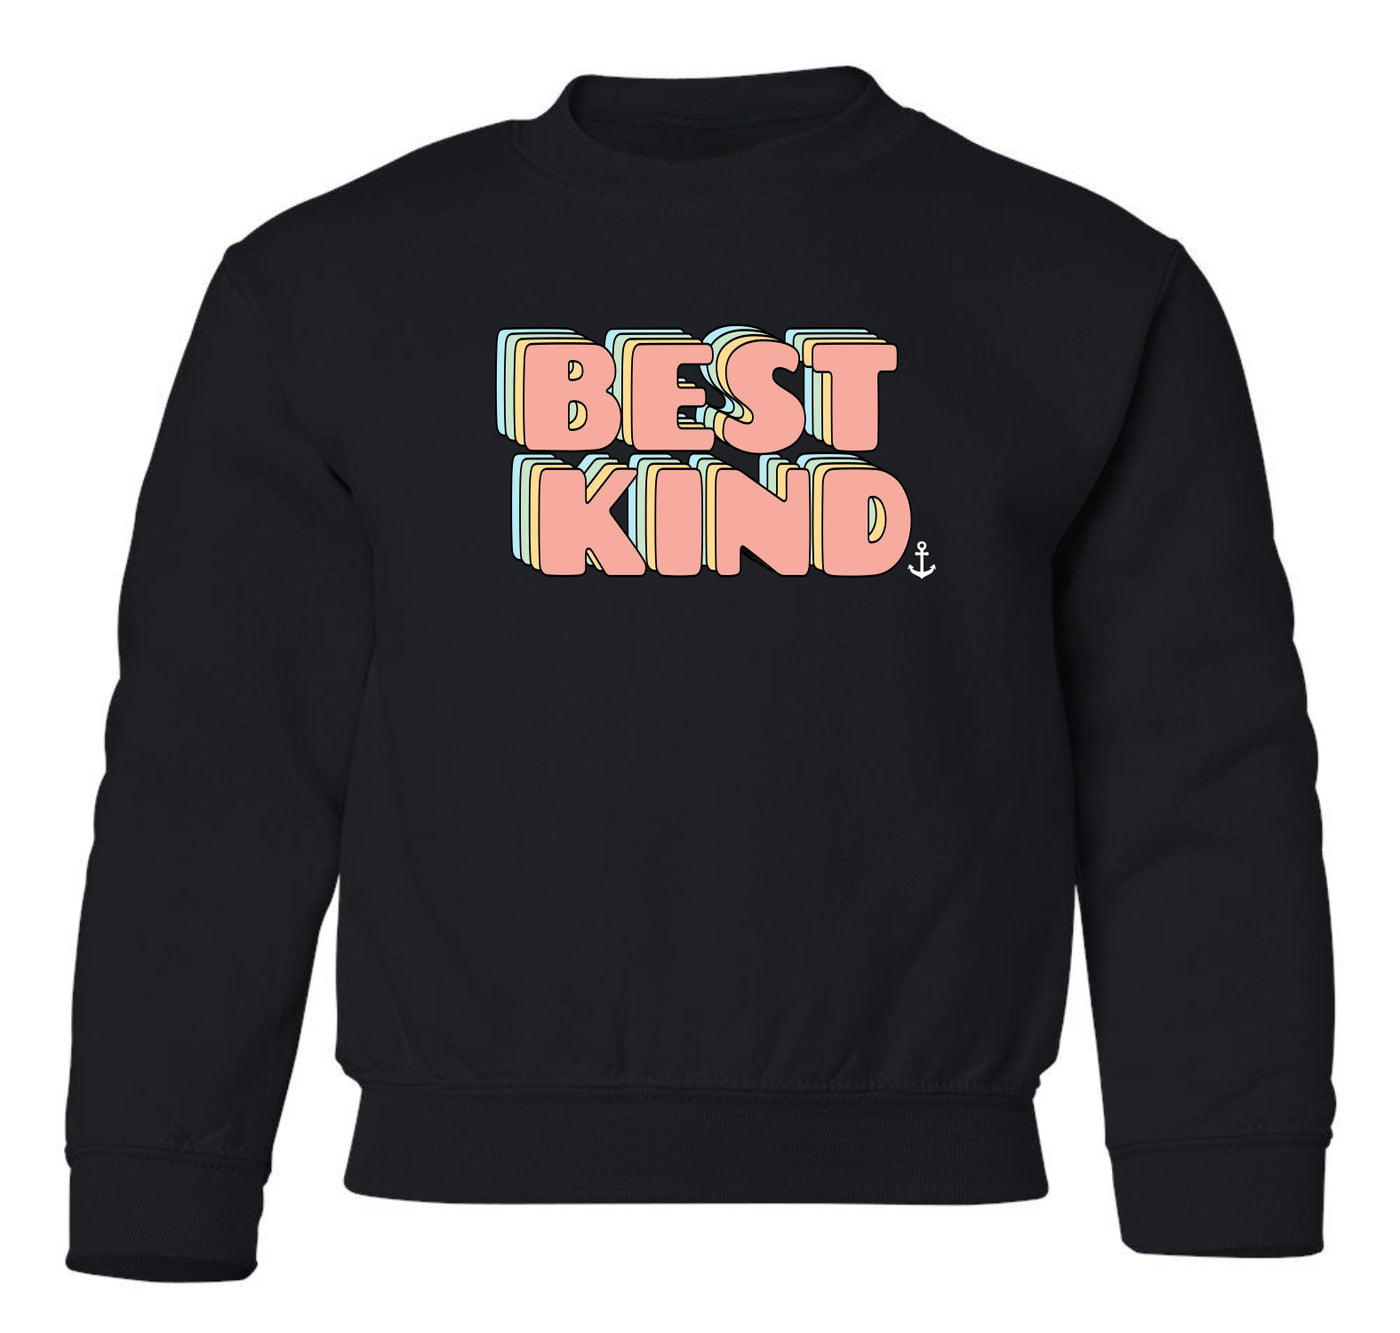 "Best Kind" Groovy Toddler/Youth Crewneck Sweatshirt